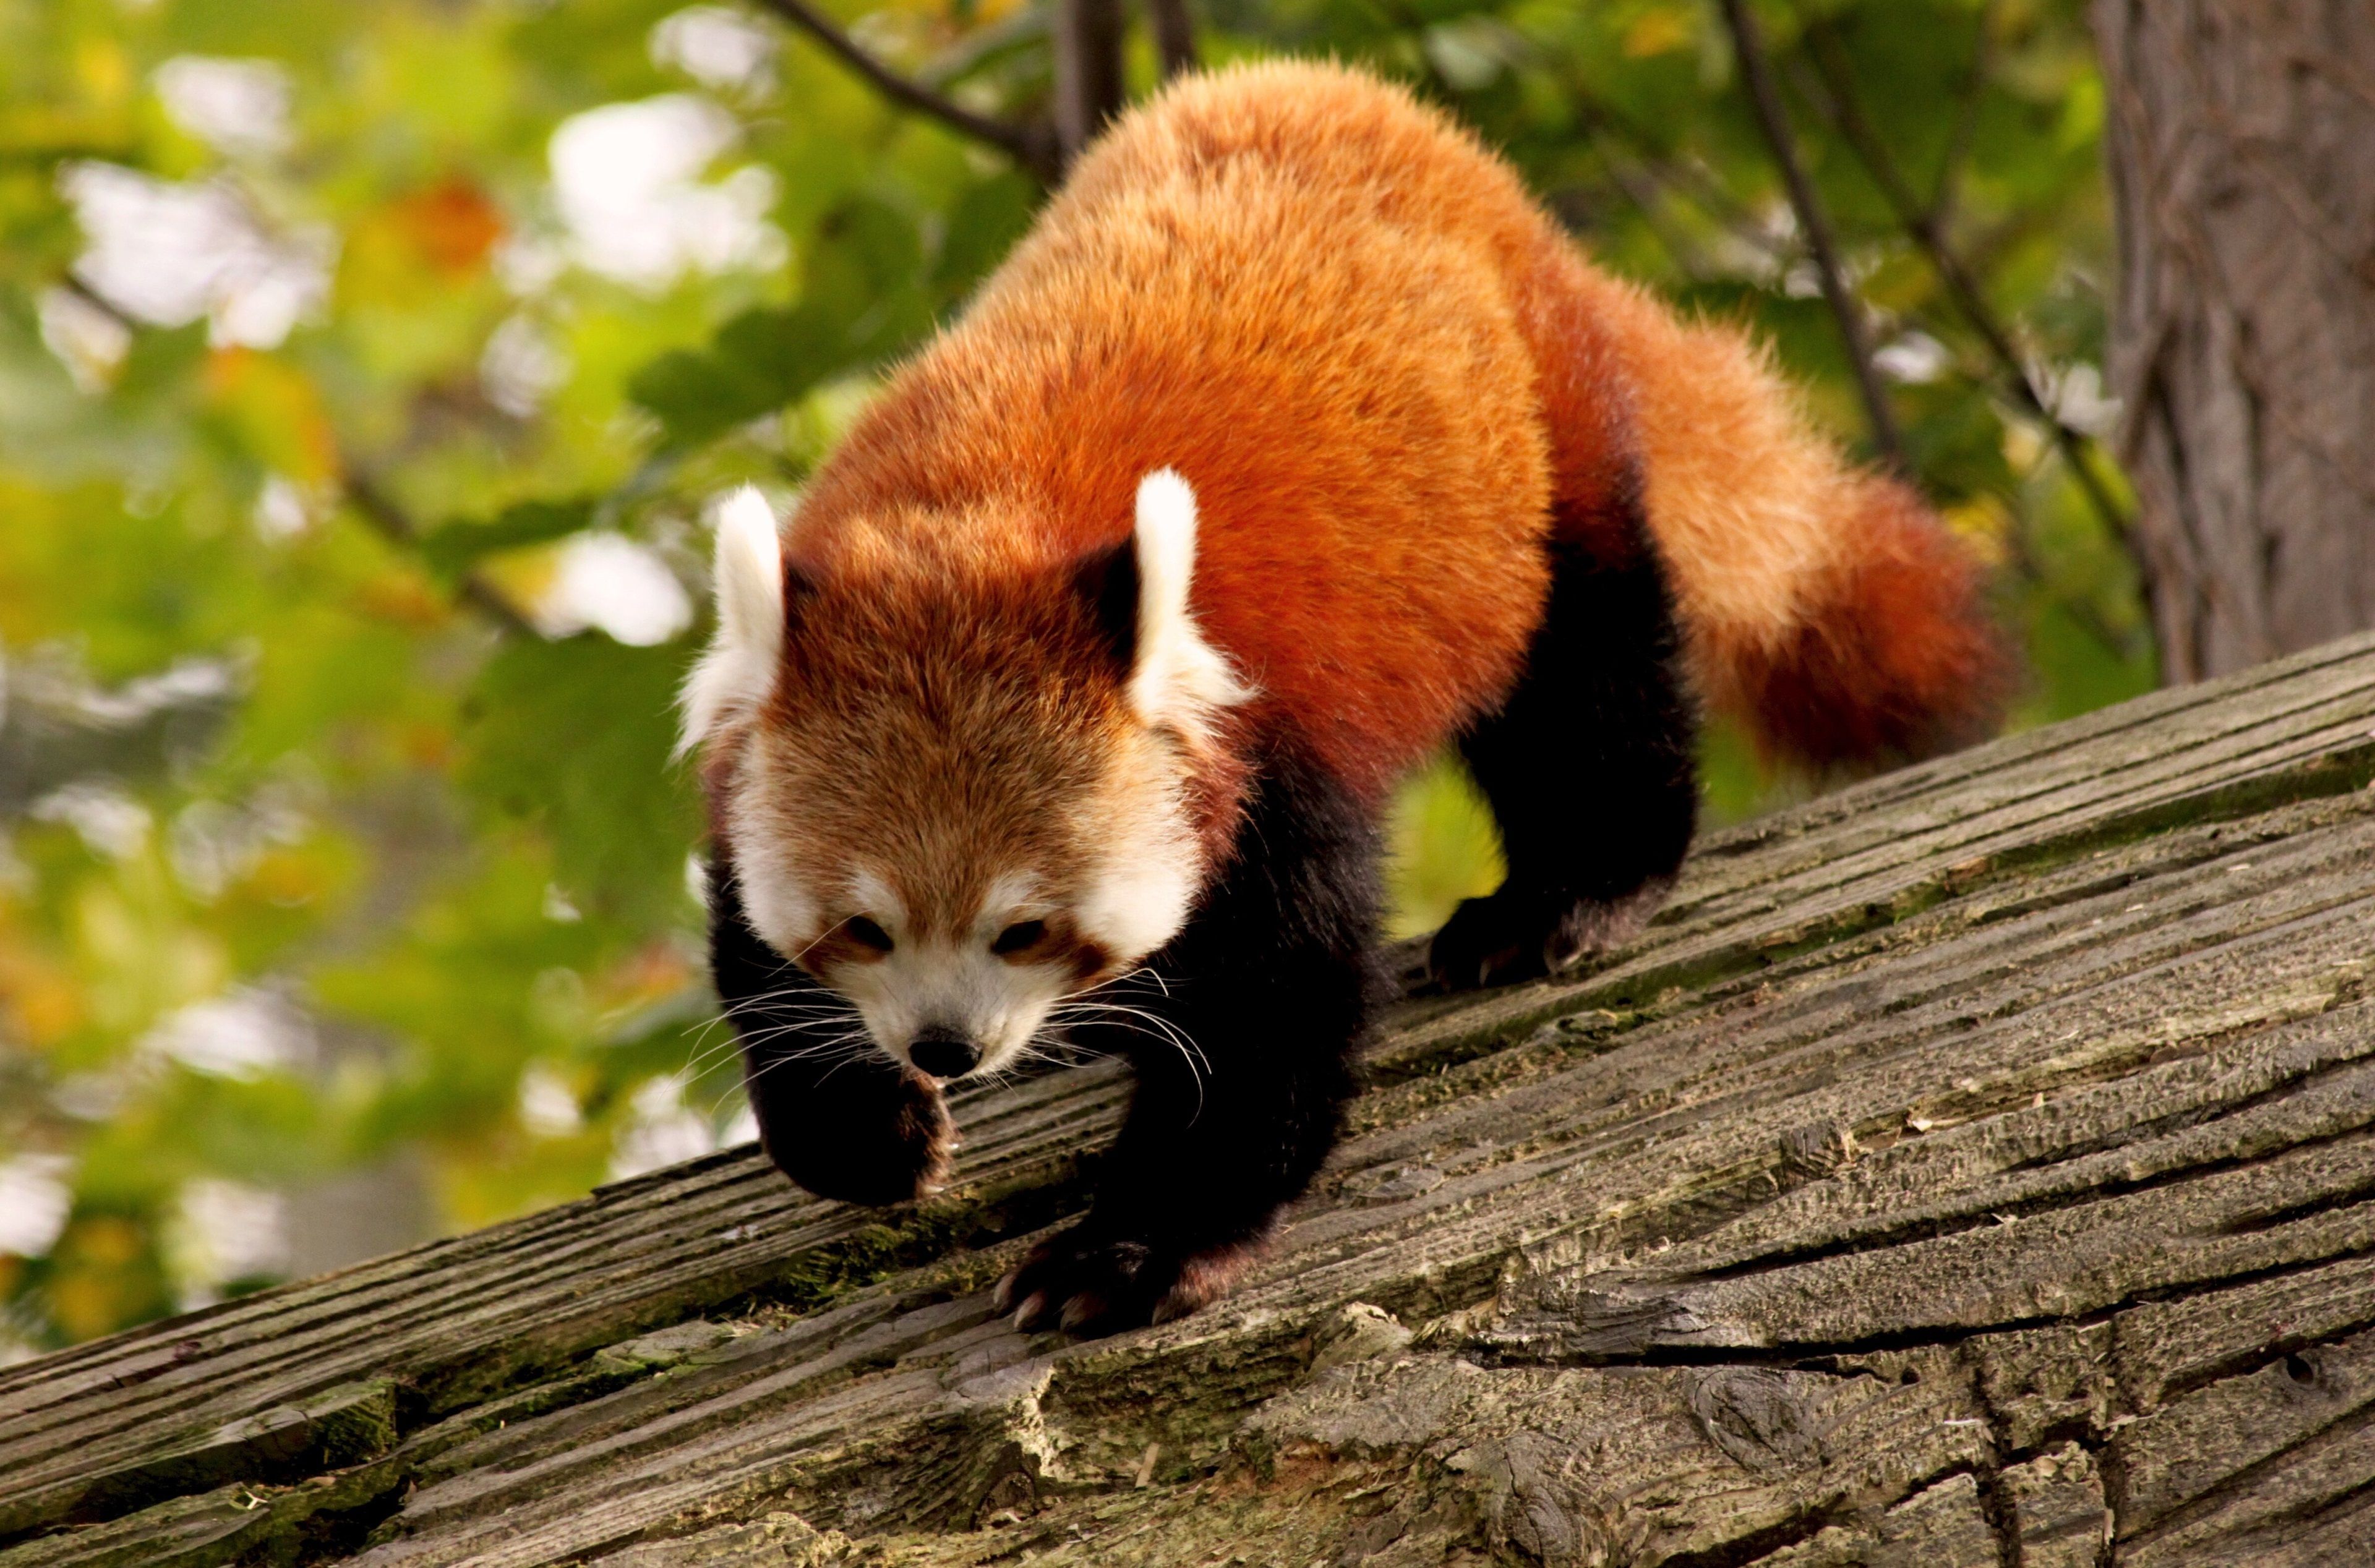 red panda 4k latest HD widescreen wallpaper free download. Red panda, Panda wallpaper, Red panda baby